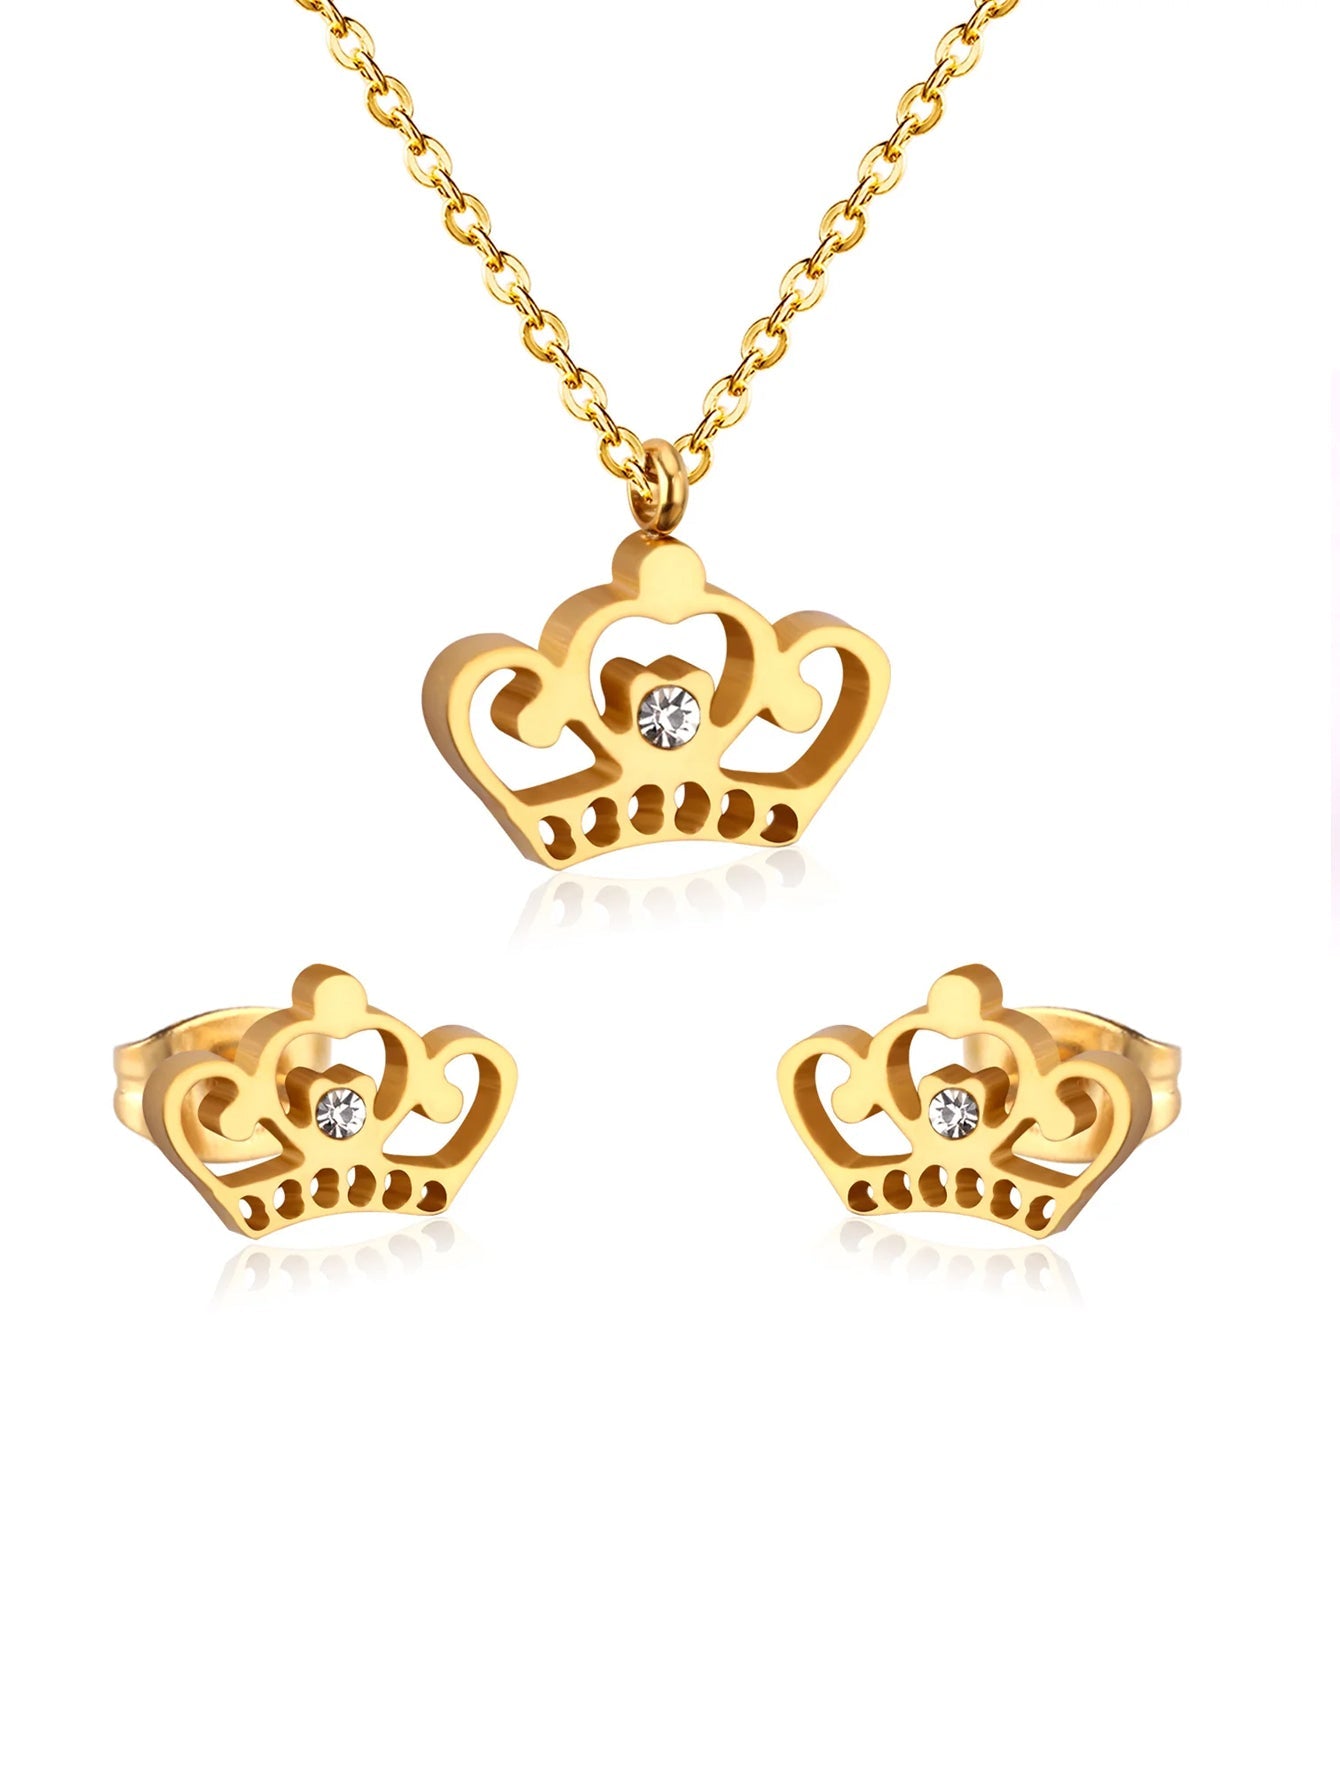 3pcs Crown Shaped Jewelry Set